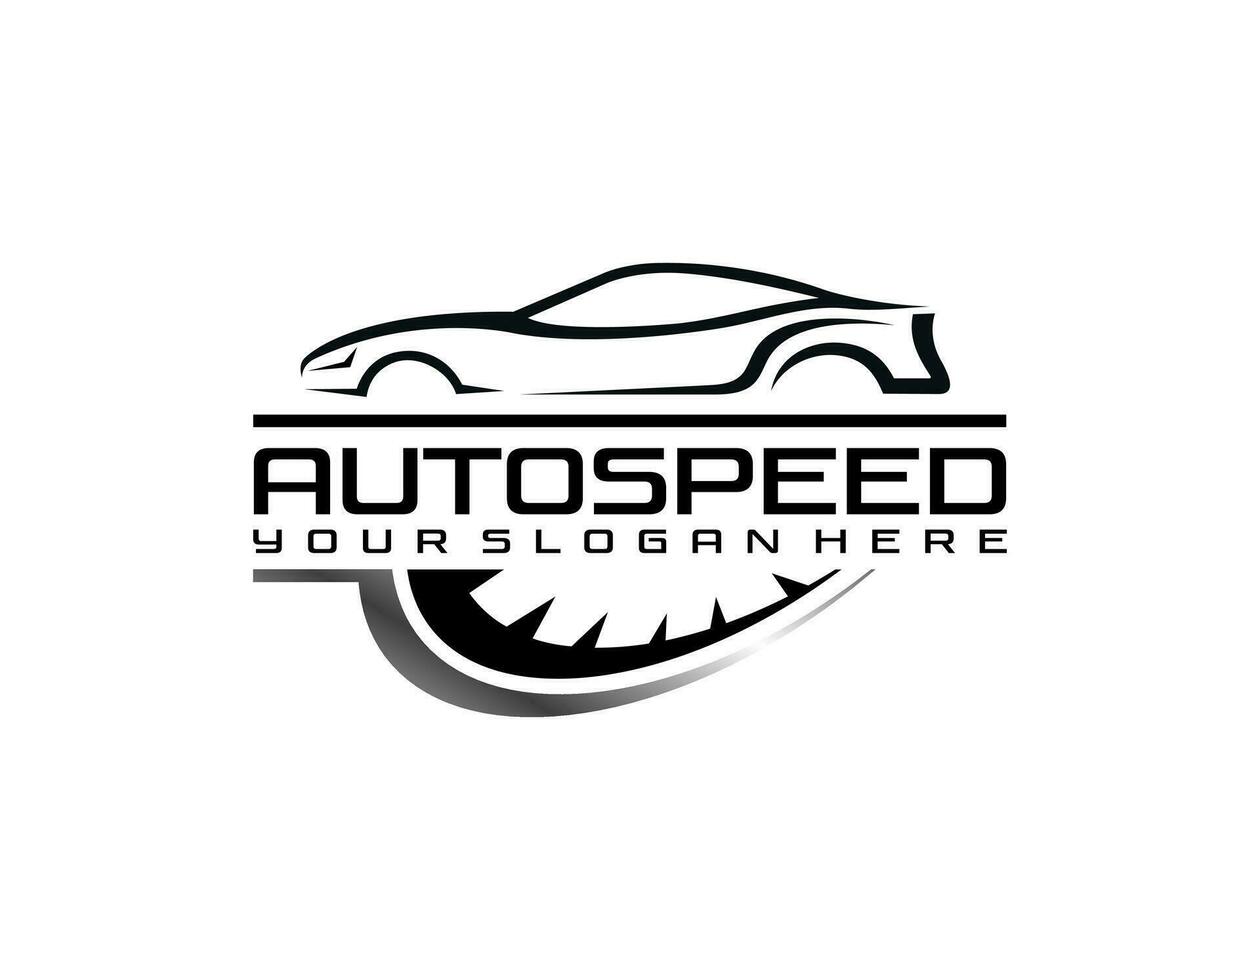 Auto shop car logo design with concept sports vehicle silhouette vector